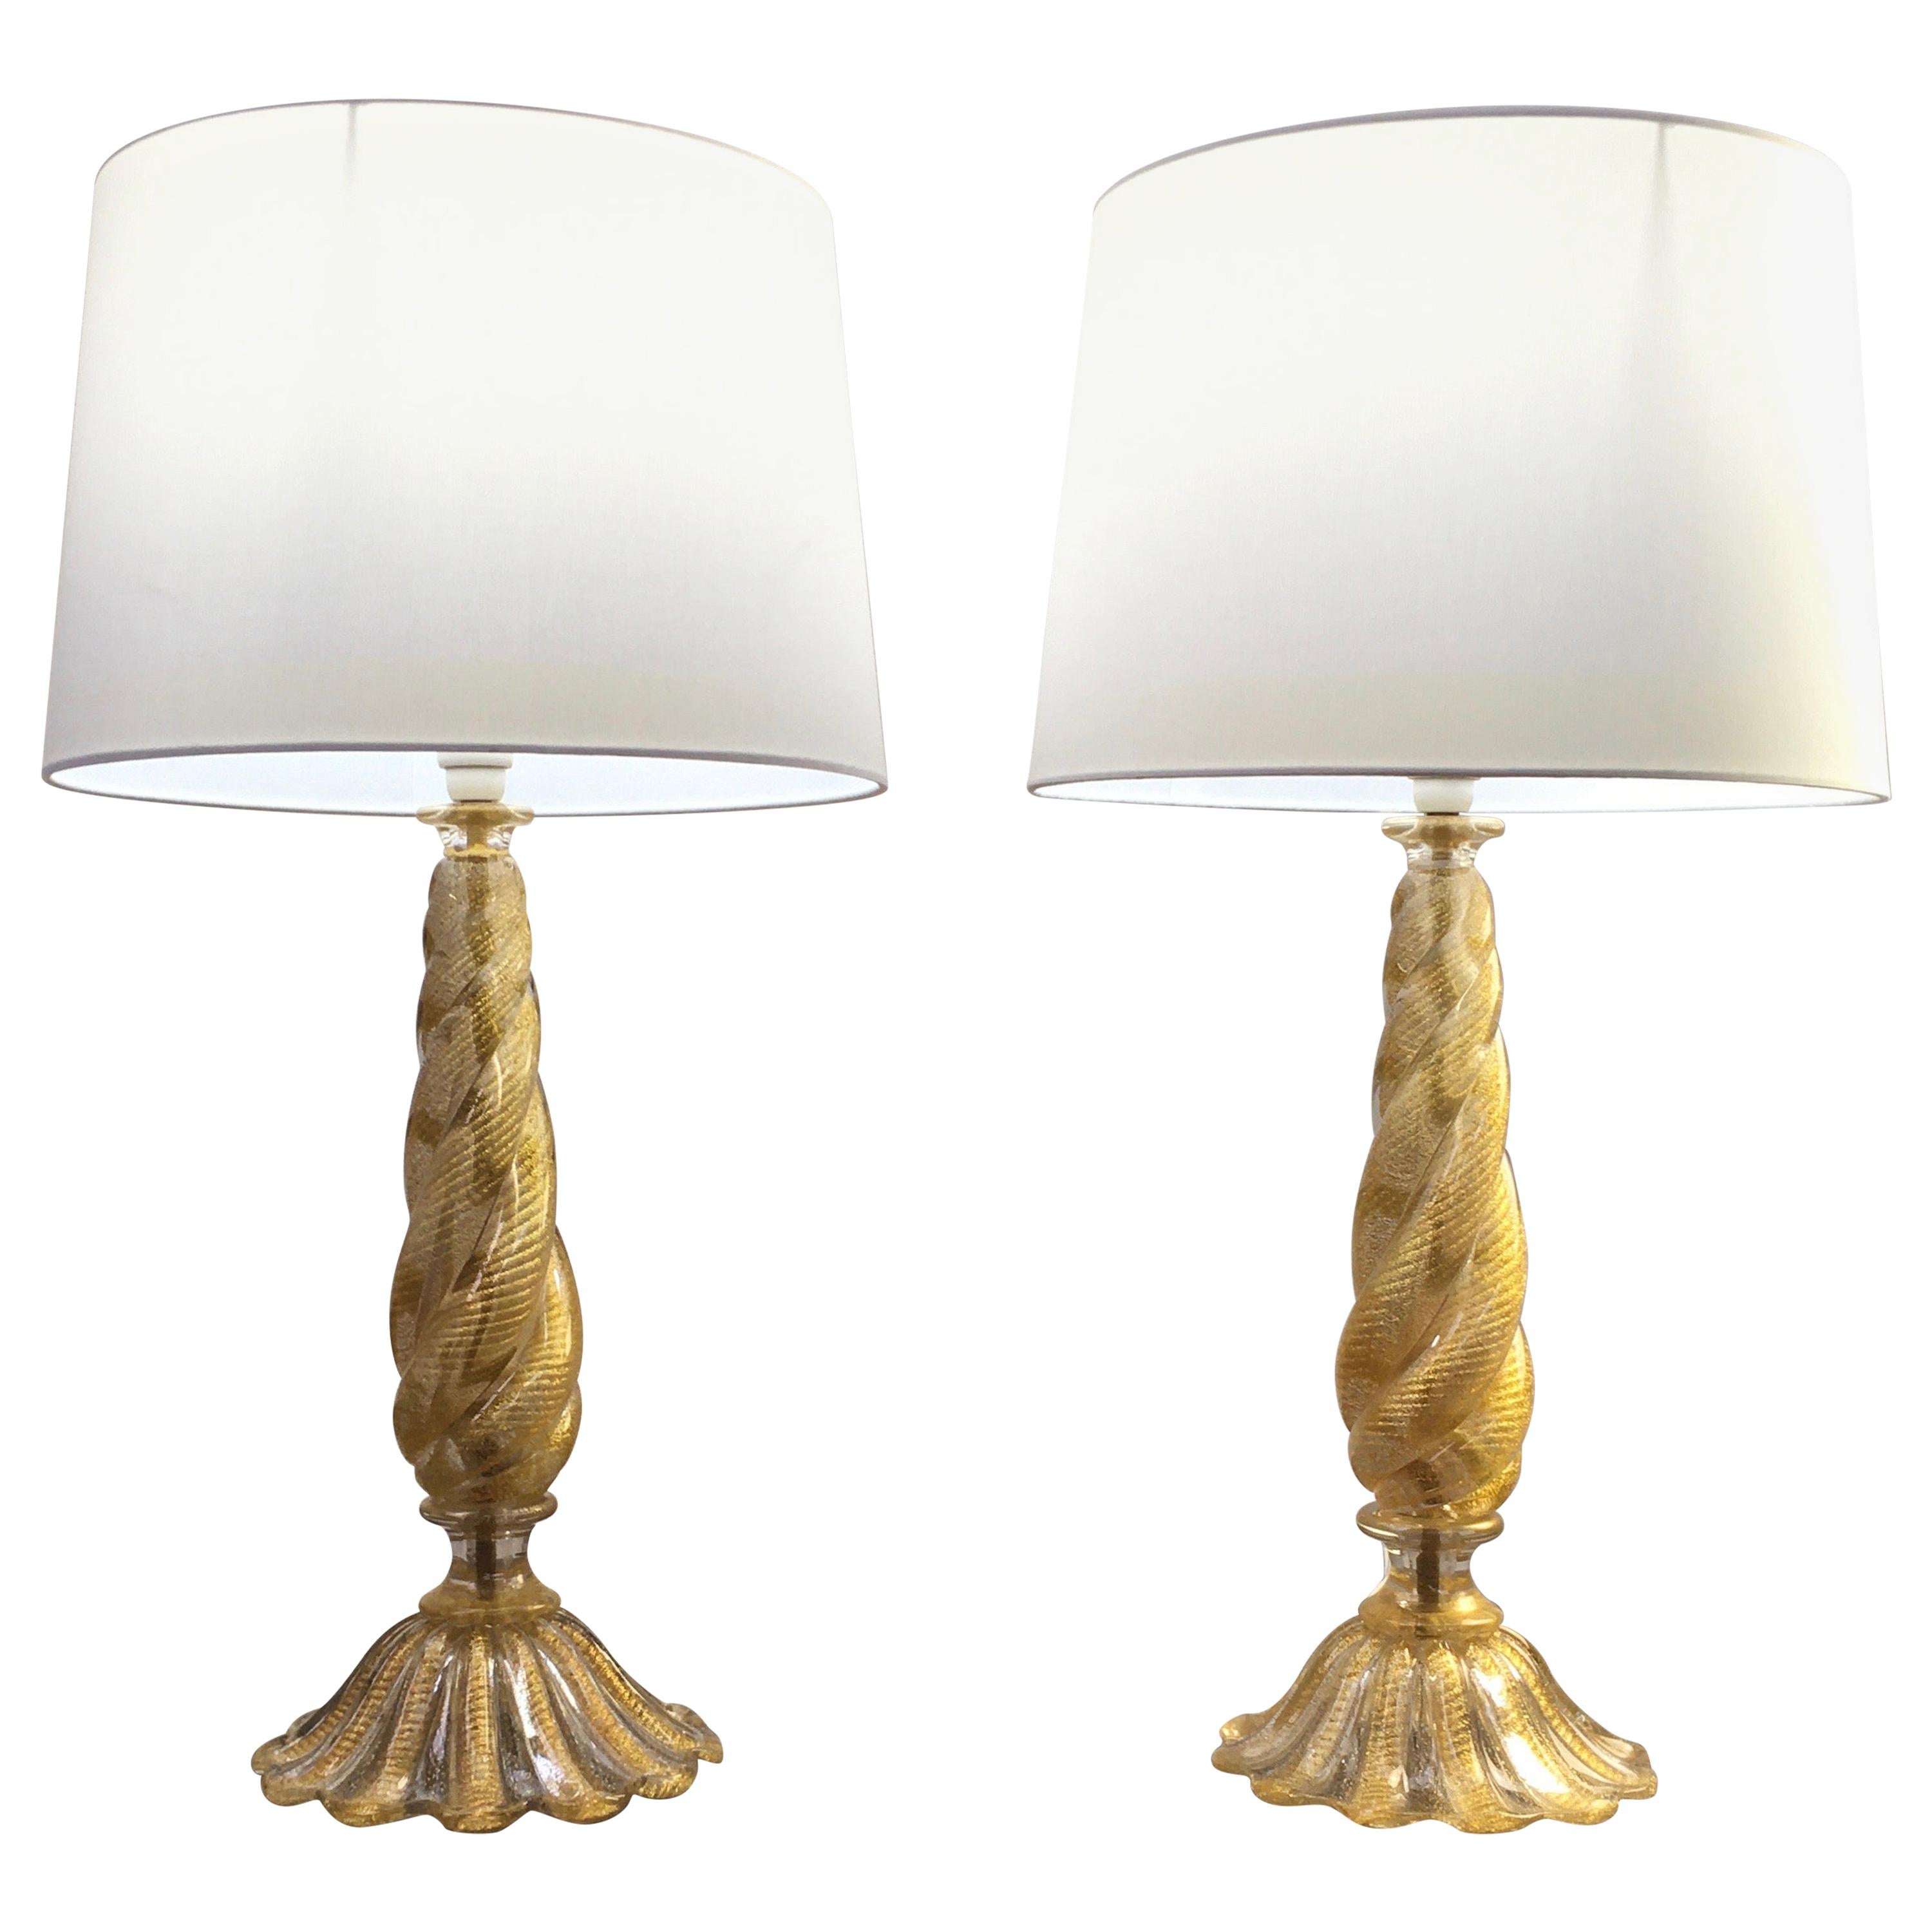 Pair of Barovier and Toso 'Cordonato D'oro' Murano Glass Lamps, Italy, 1950s For Sale